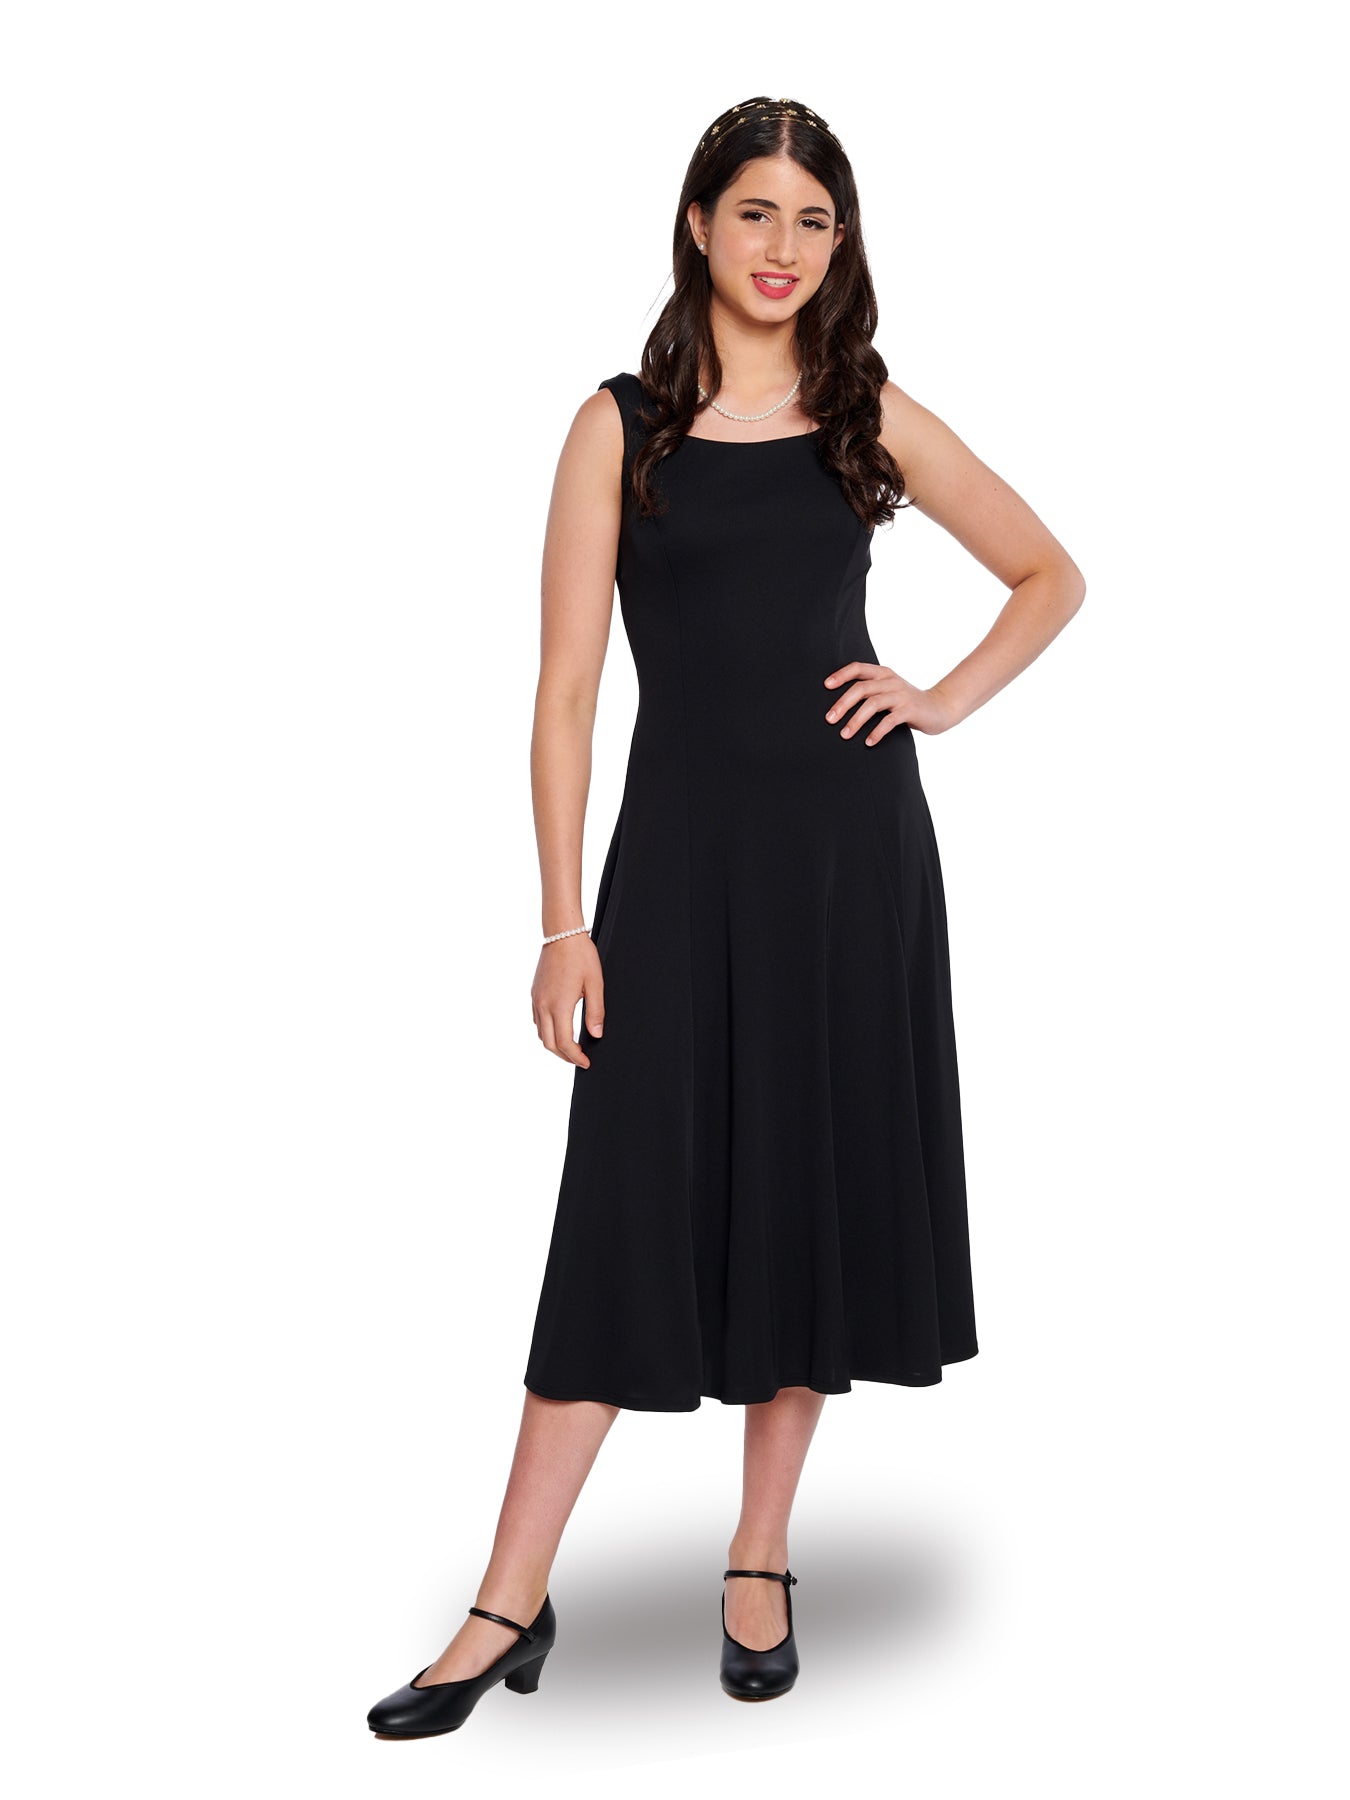 HANNAH (Style #400) - Scoop Neck Sleeveless Swing Dress